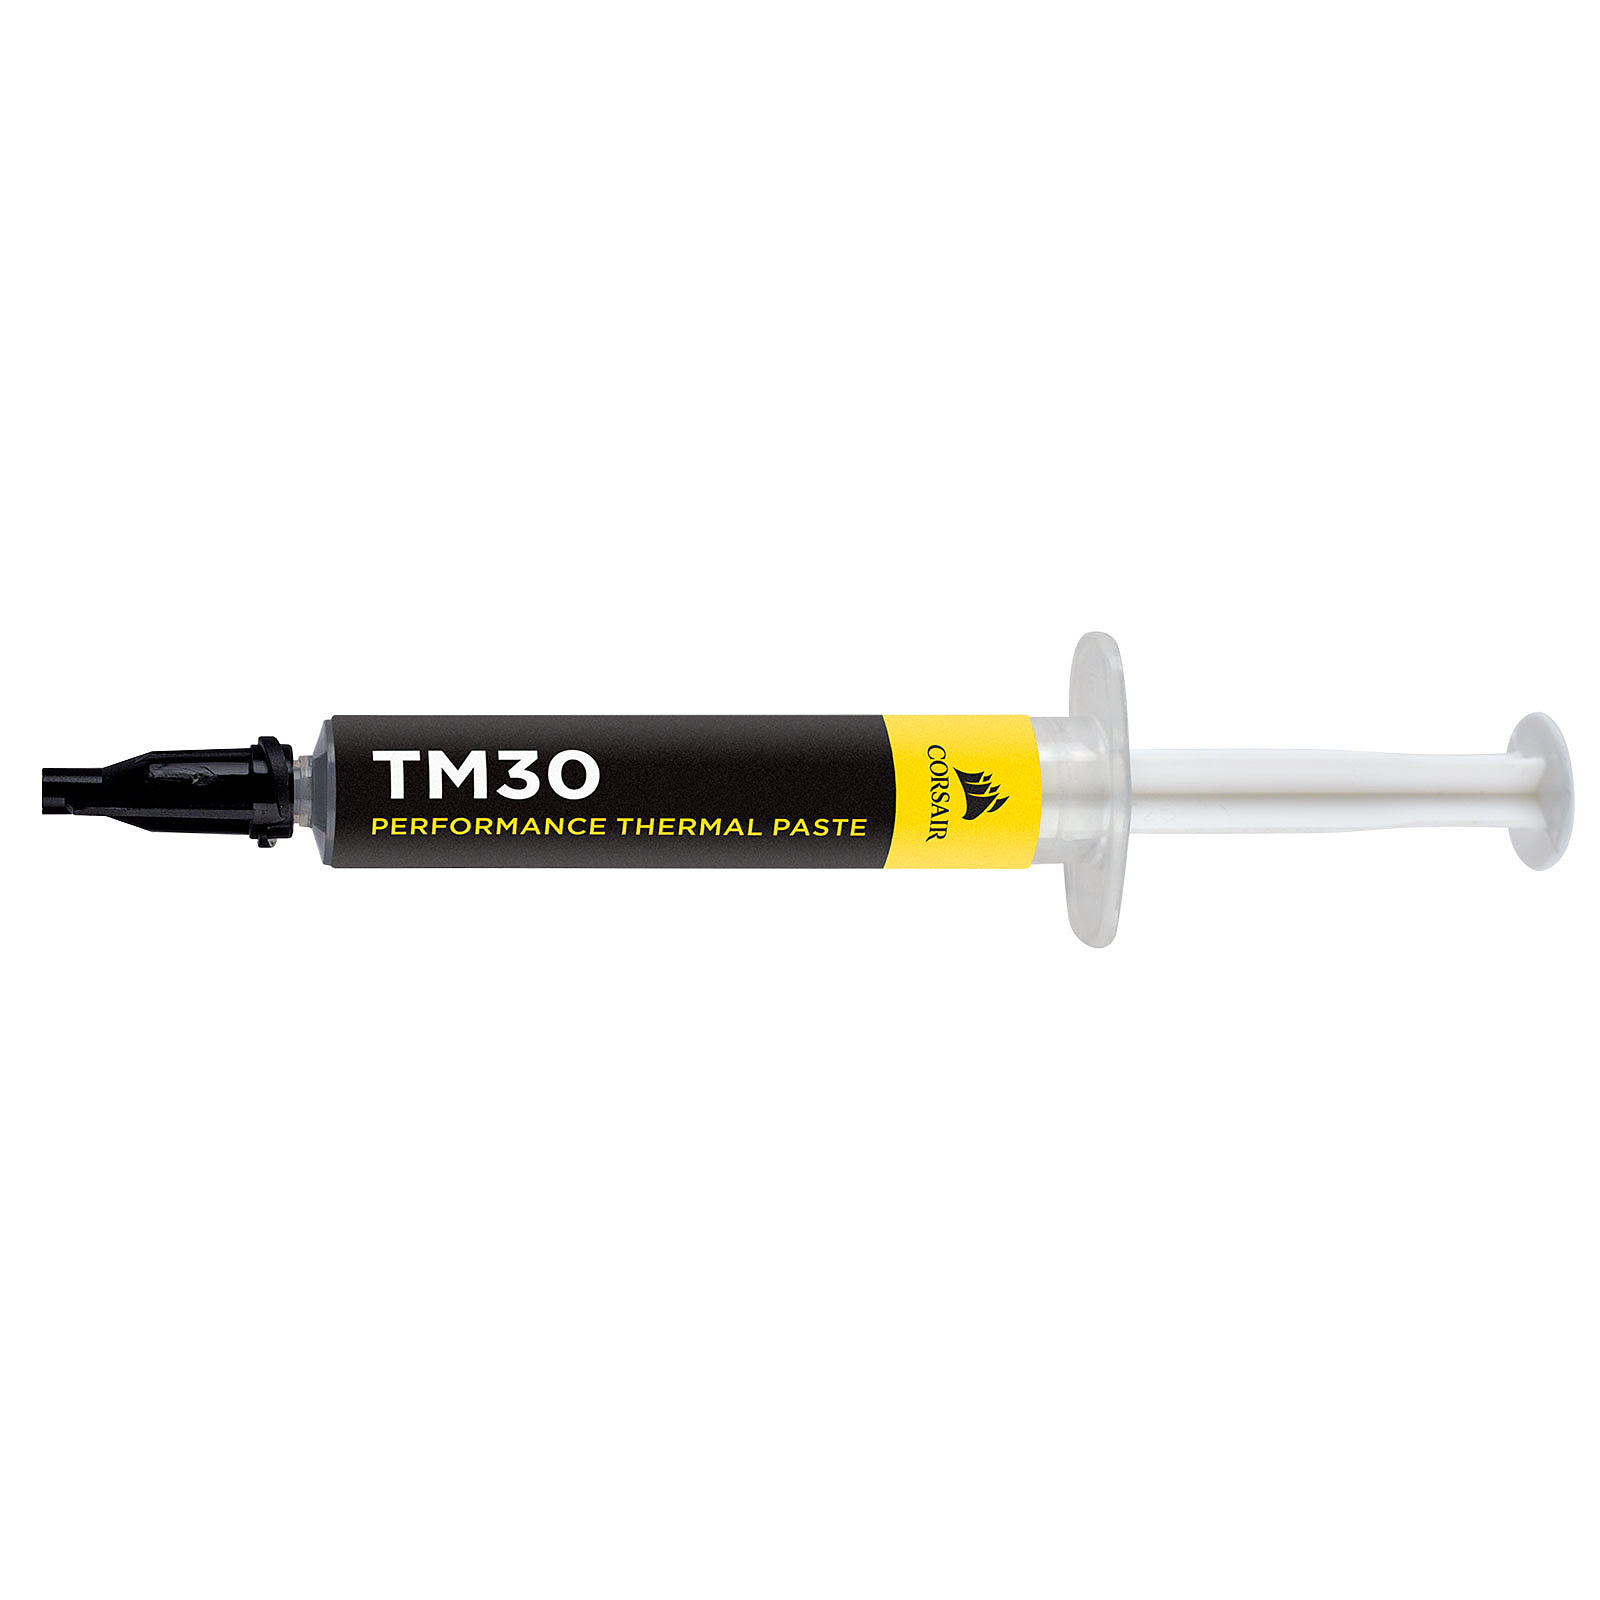 TM30 Performance Thermal Paste 3 grammes - Corsair CT-9010001-WW - 2